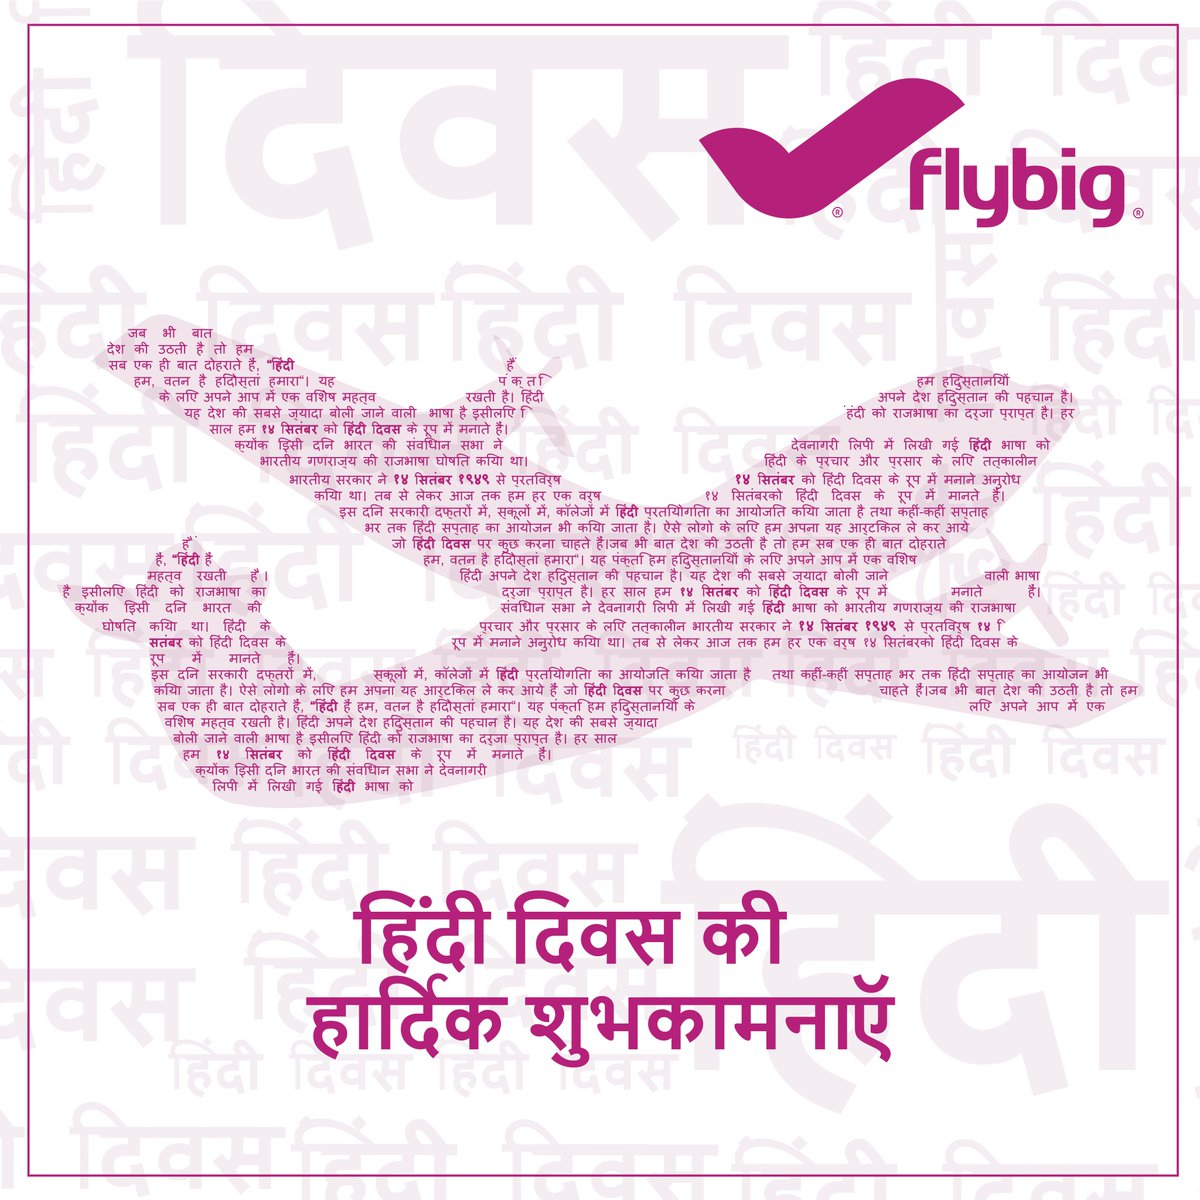 आप सबको हिंदी दिवस की हार्दिक शुभकामनाएं।
We wish everyone a #HappyHindiDiwas.

#flybig #IndiaAviation #Hindidiwas #Hindi #namaskar